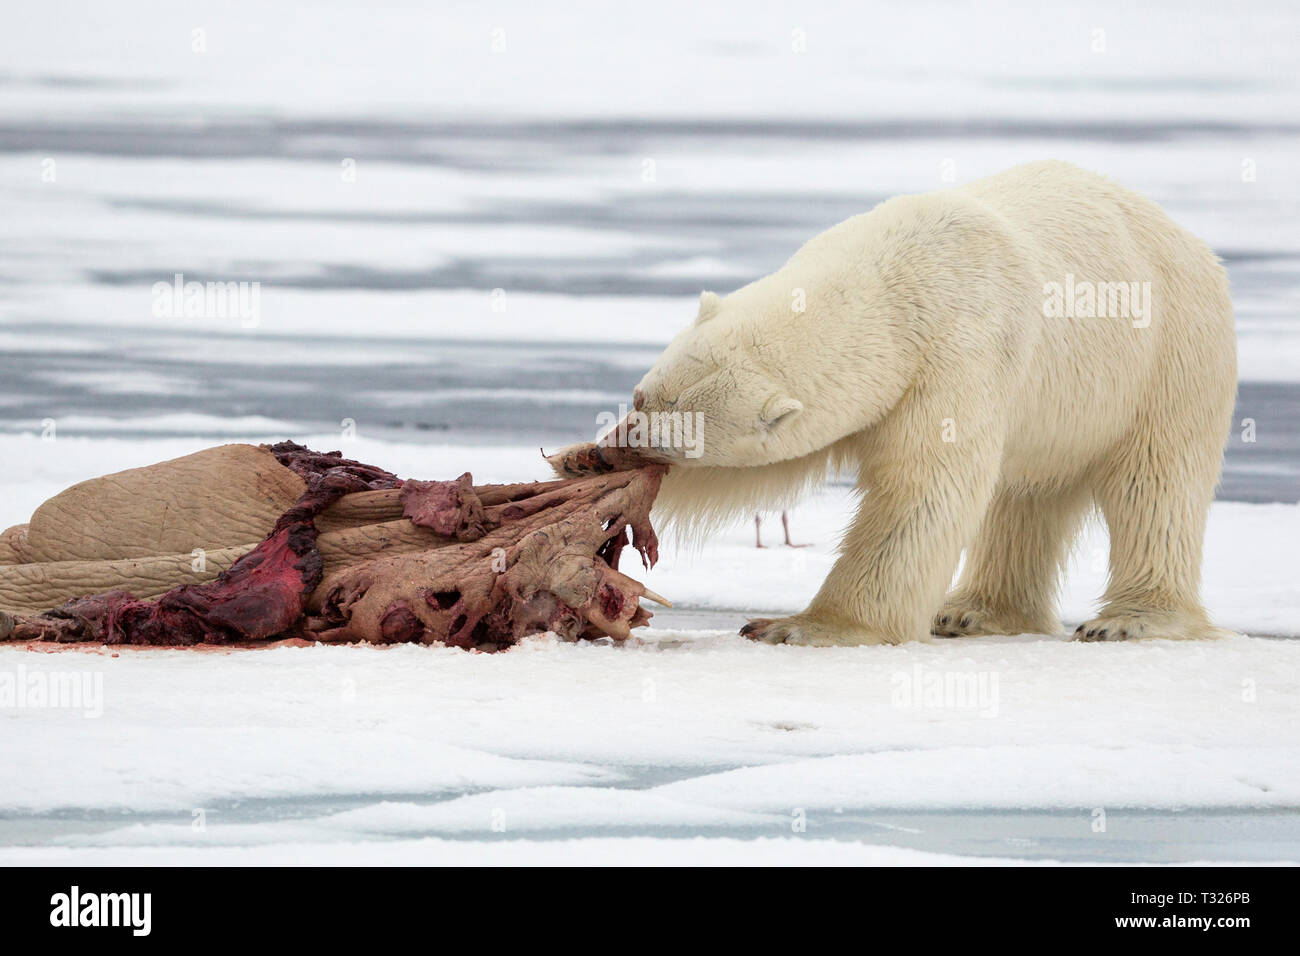 Alimentación de osos polares muertos morsa, Ursus maritimus, Spitsbergen,  Océano ártico, Noruega Fotografía de stock - Alamy